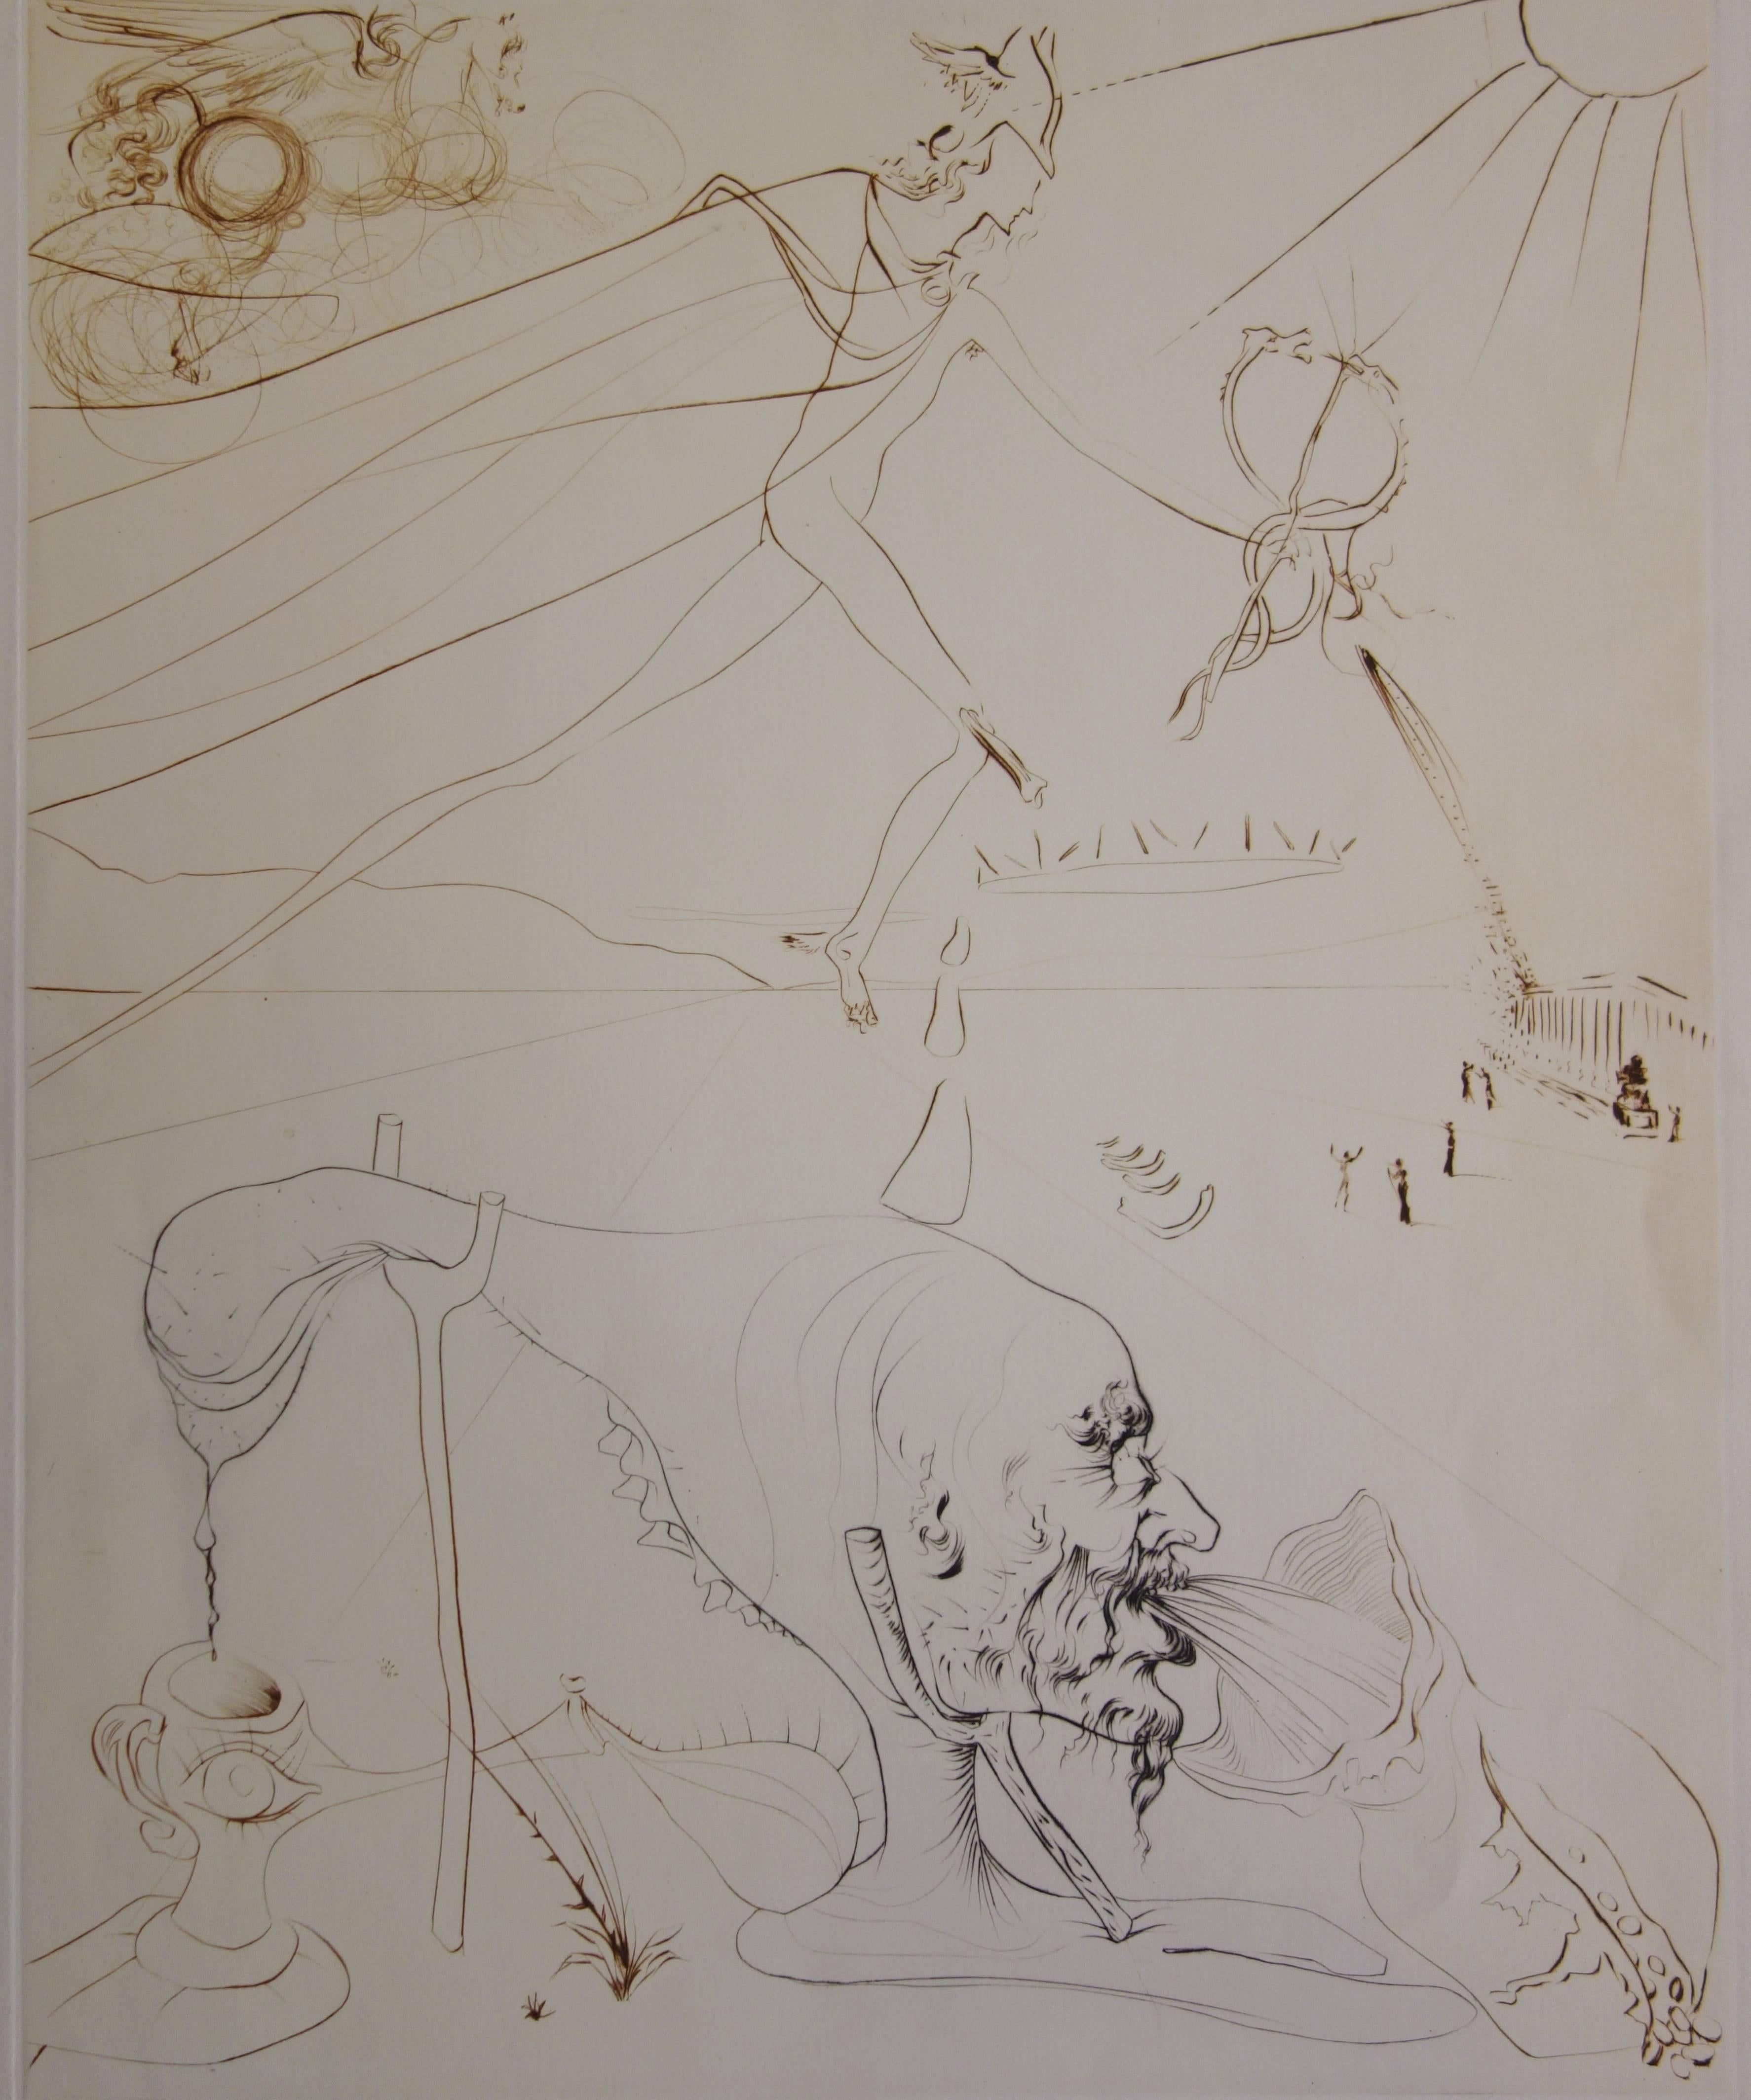 L'Alchimie - Original etching - 1972 - 50 exem - Gray Figurative Print by Salvador Dalí